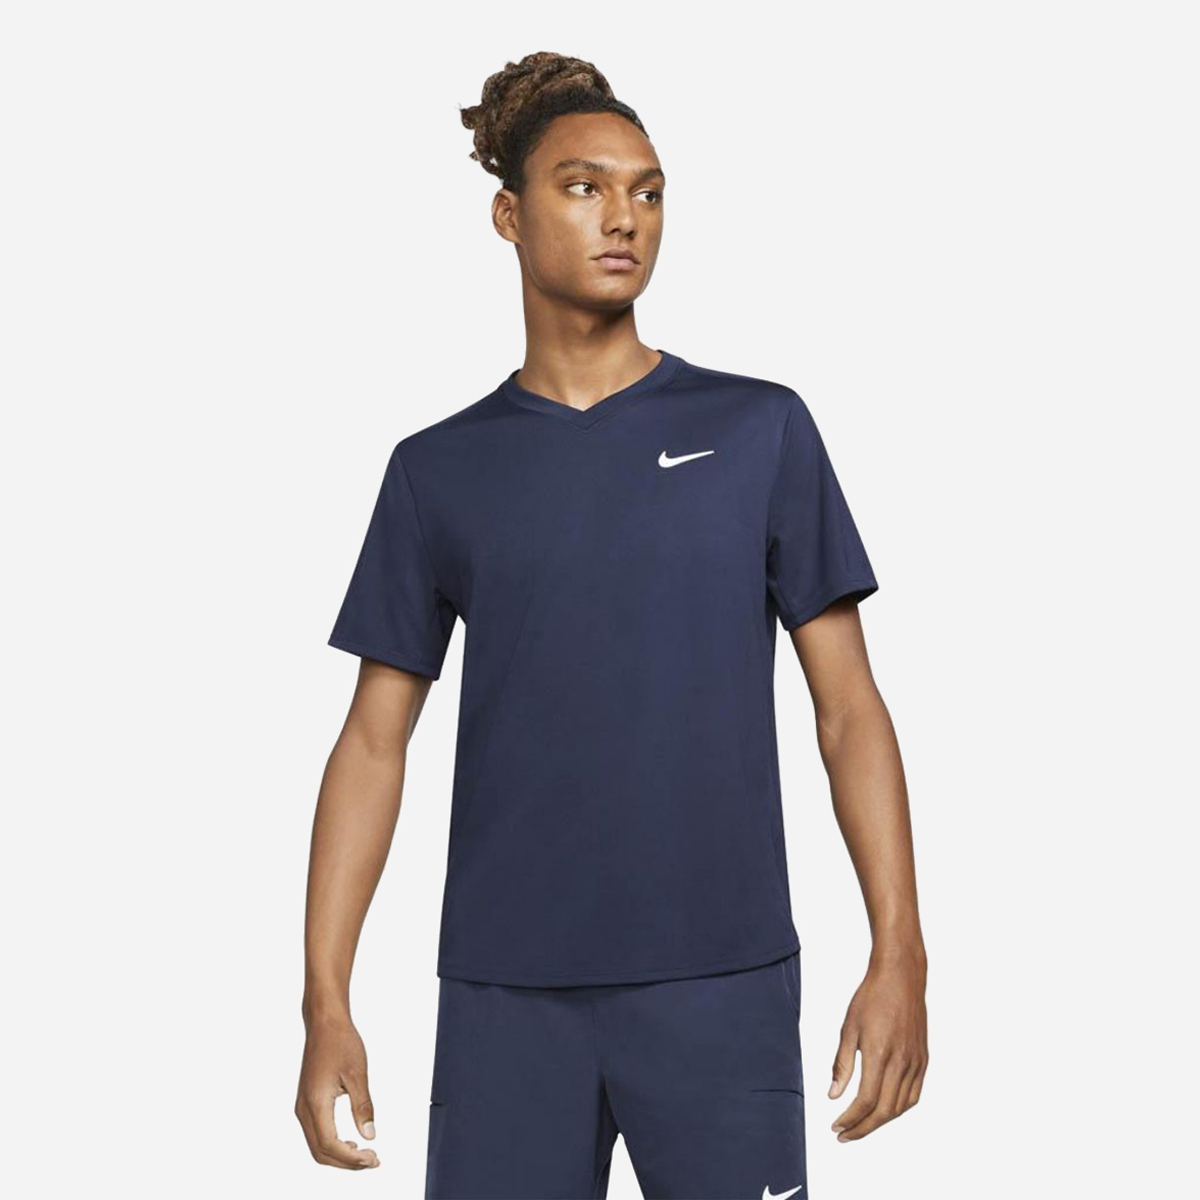 AN264222 Court Dri-fit Victory Men's Tennis Shirt